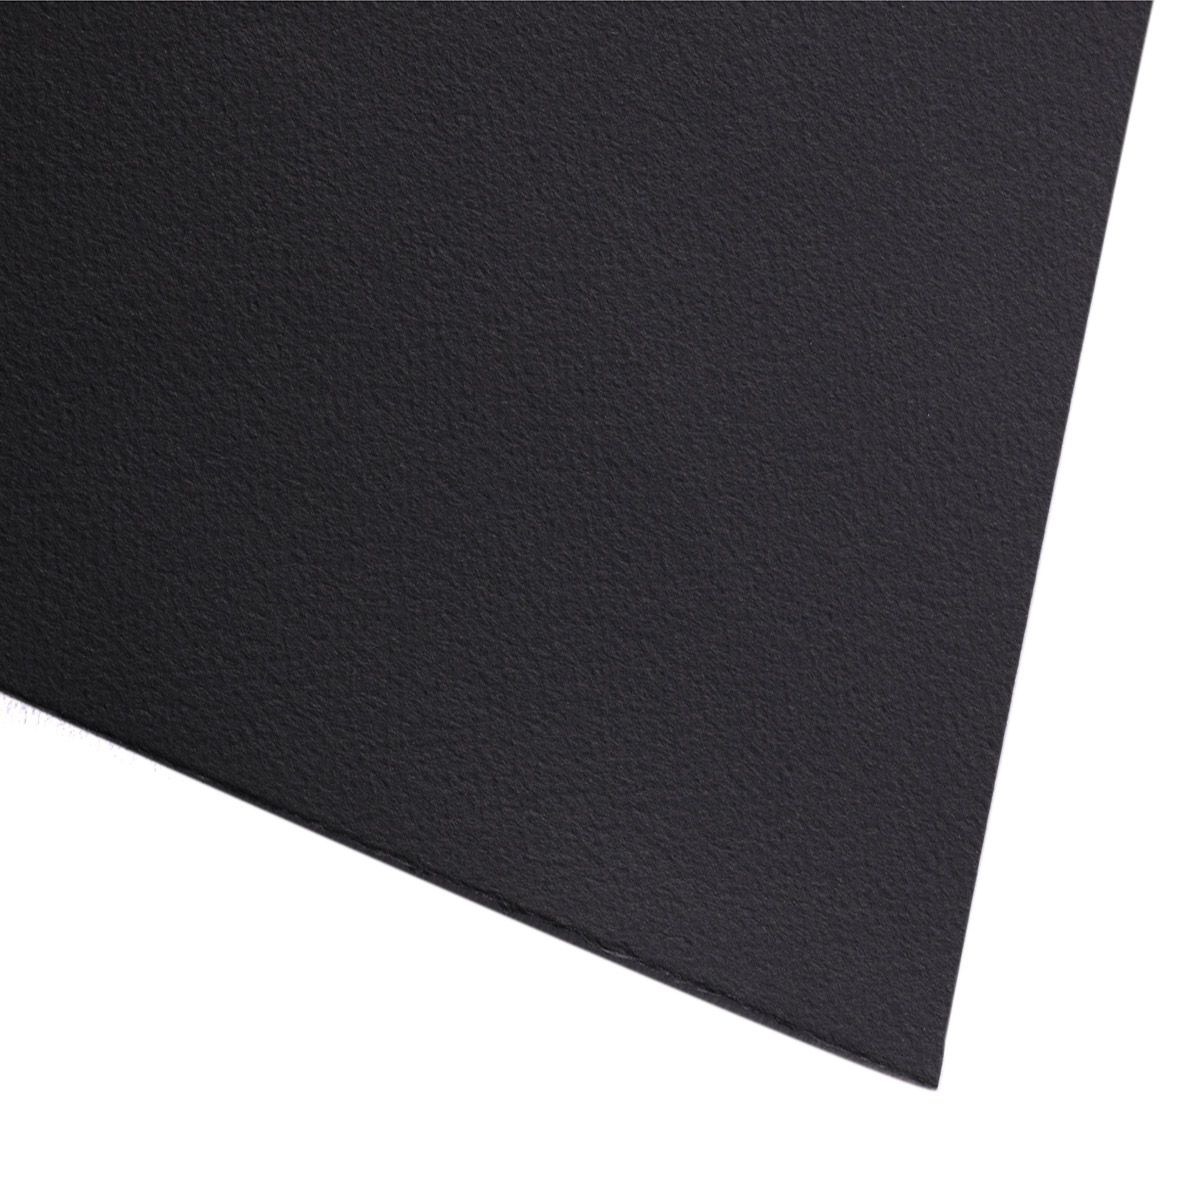 Fabriano Cromia Paper Sheet Black 19.6